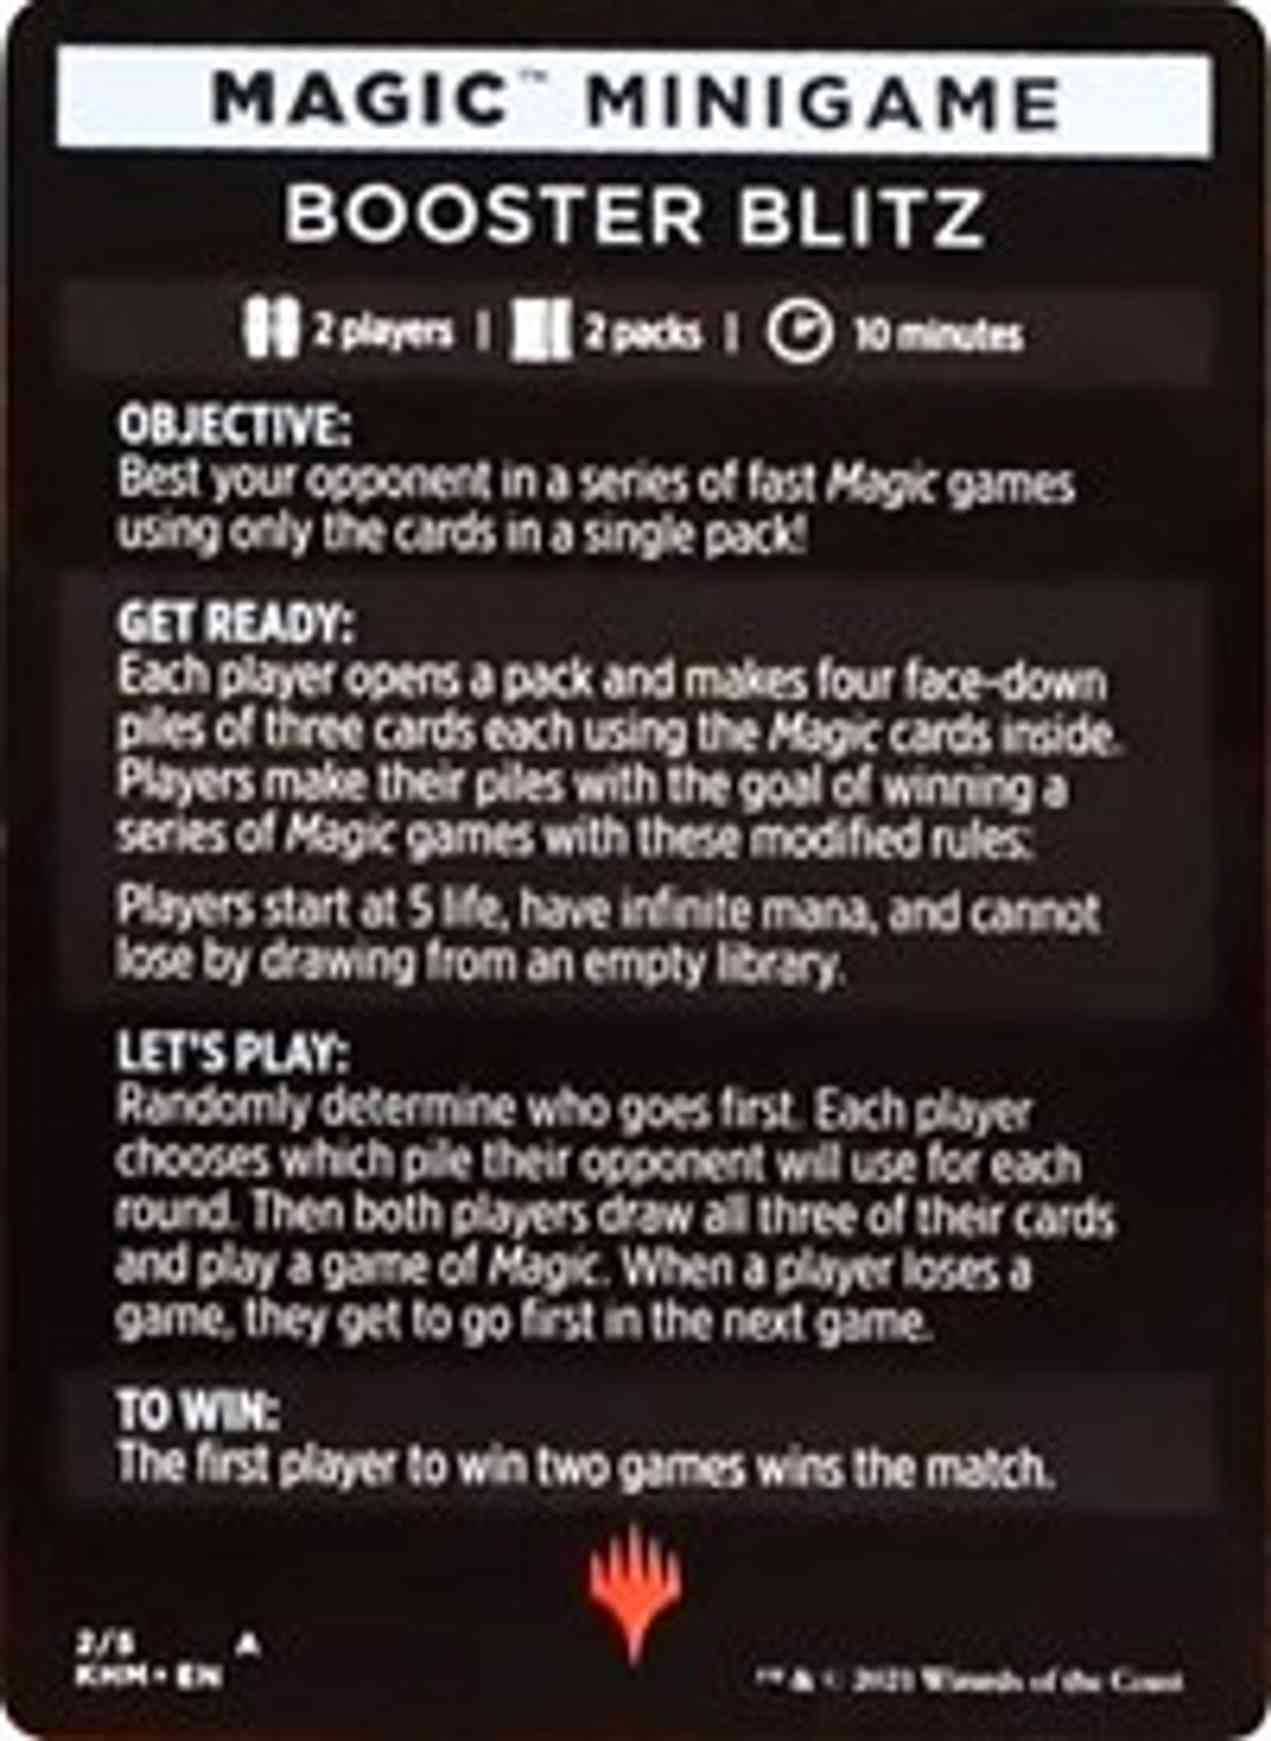 Magic Minigame: Booster Blitz magic card front